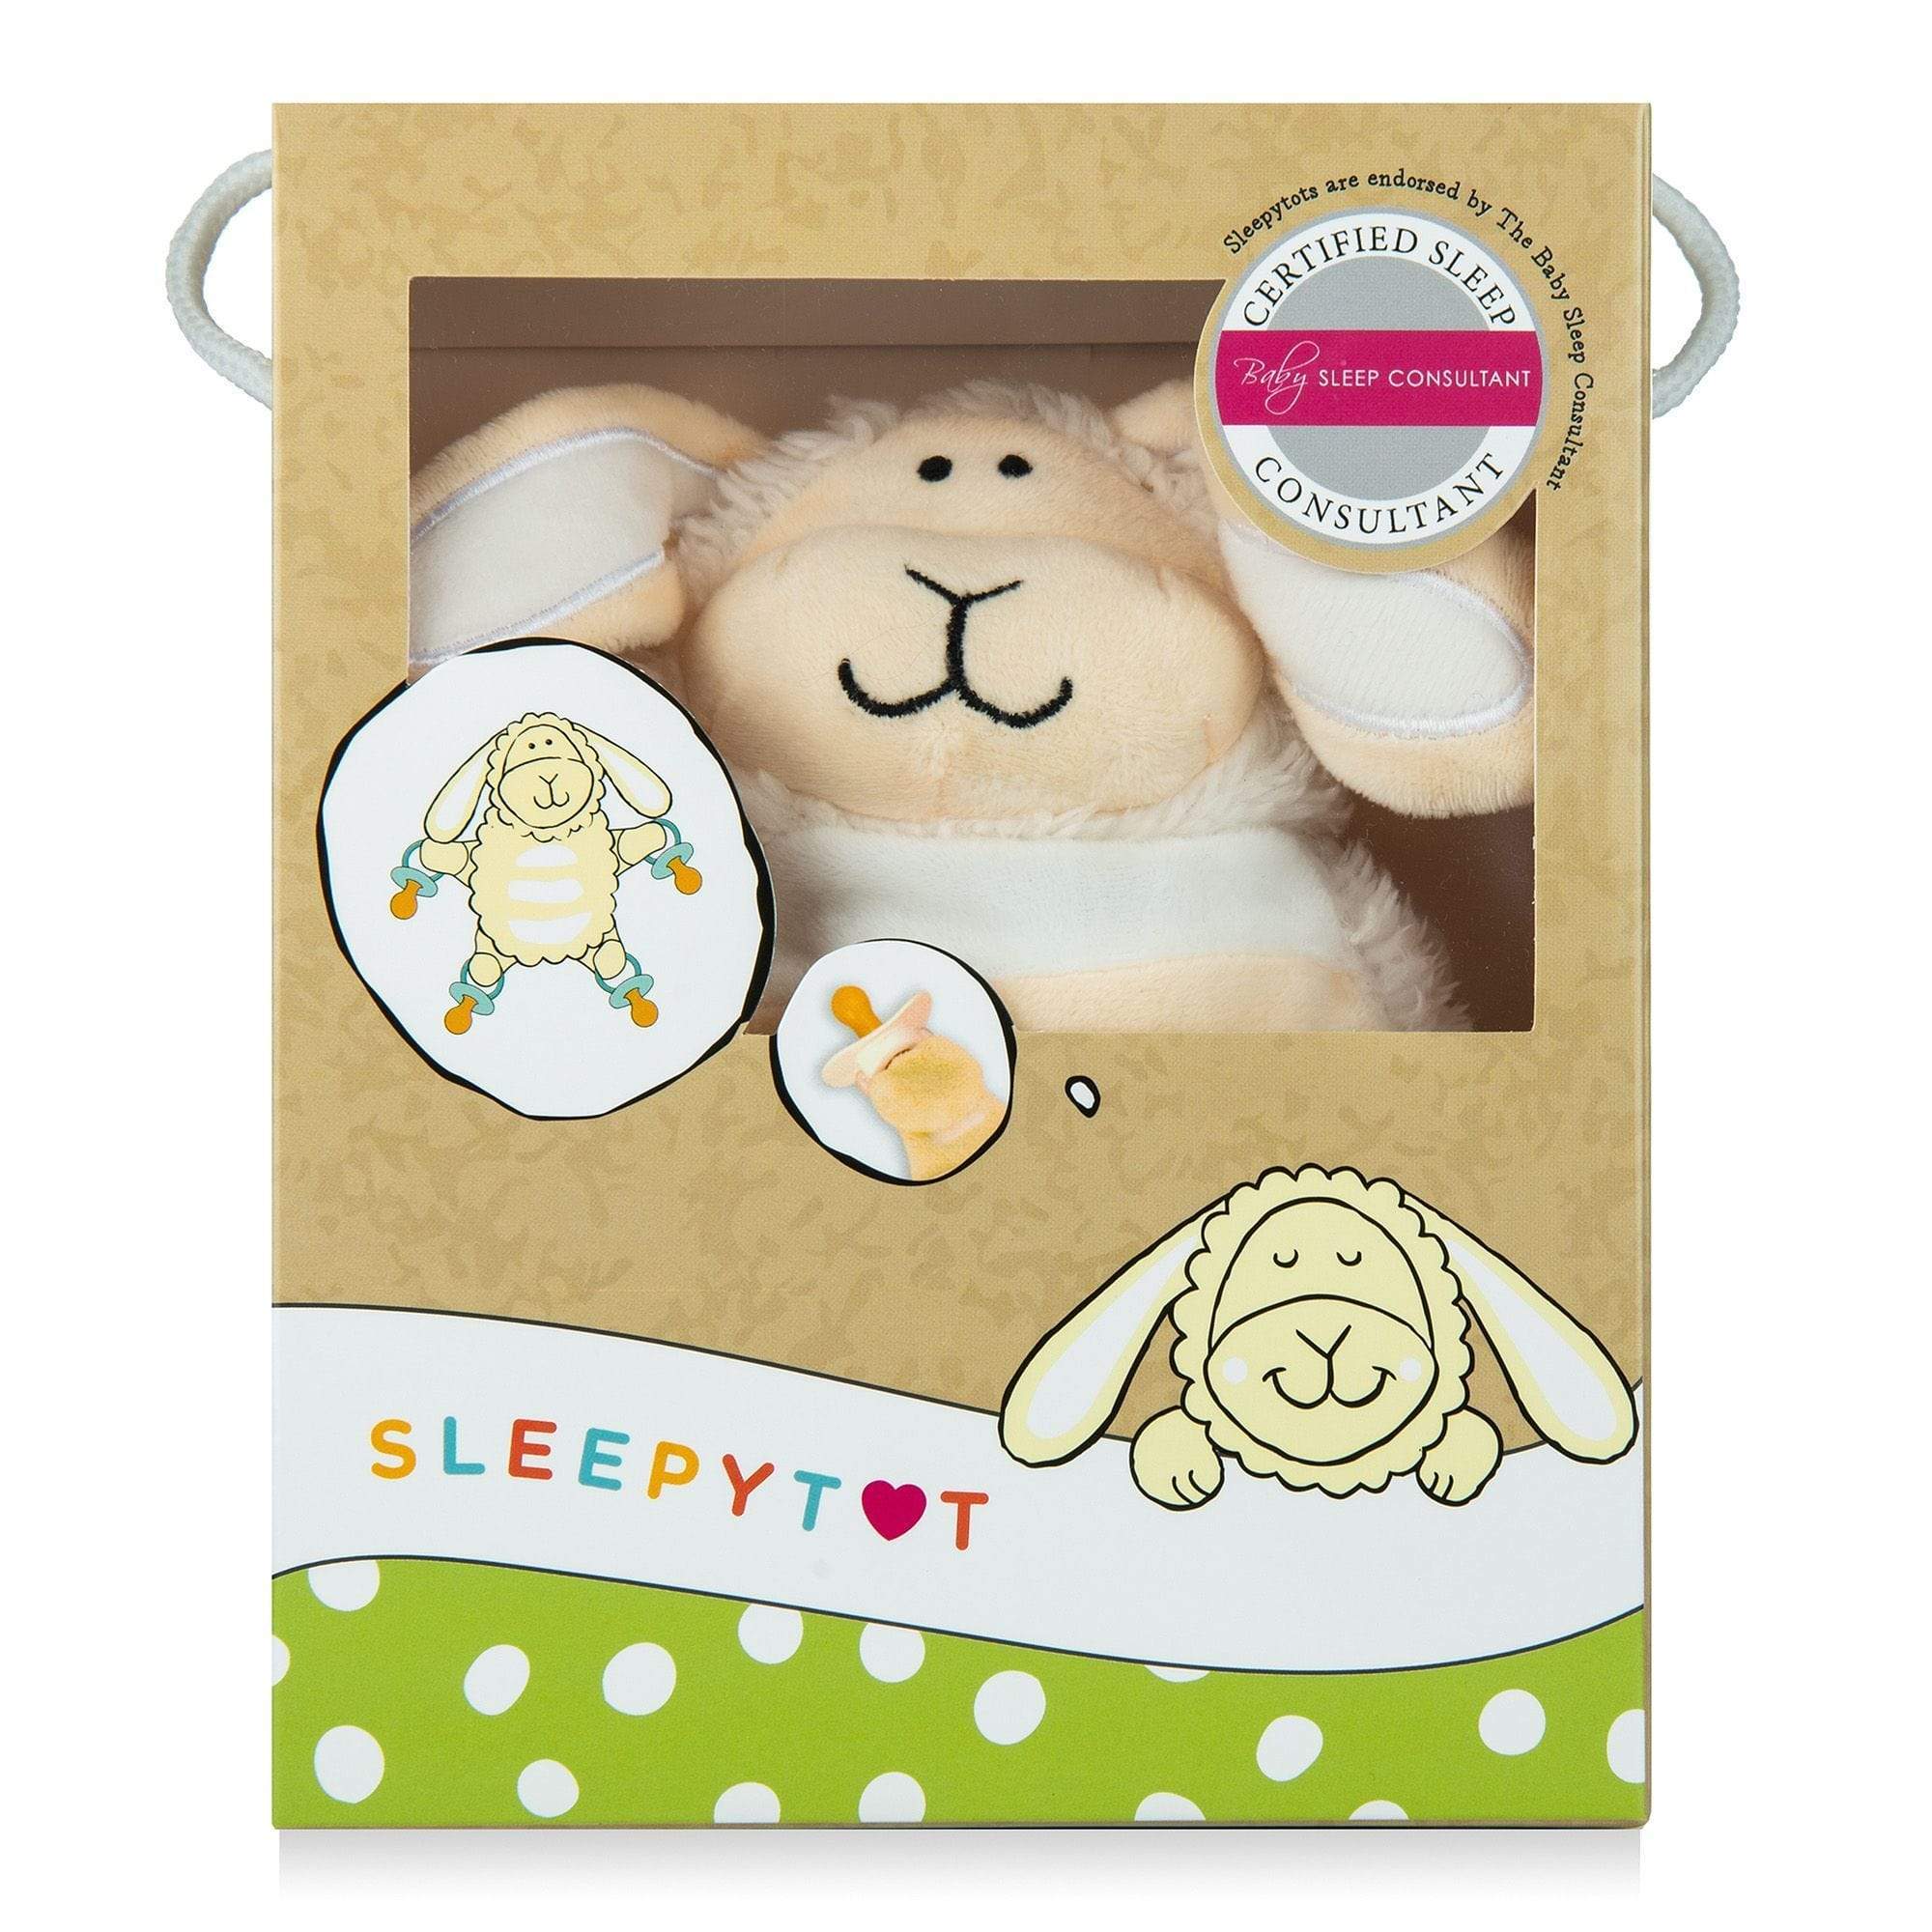 Sleepytot Toys Comforter Lamb New Generation Sleepytot